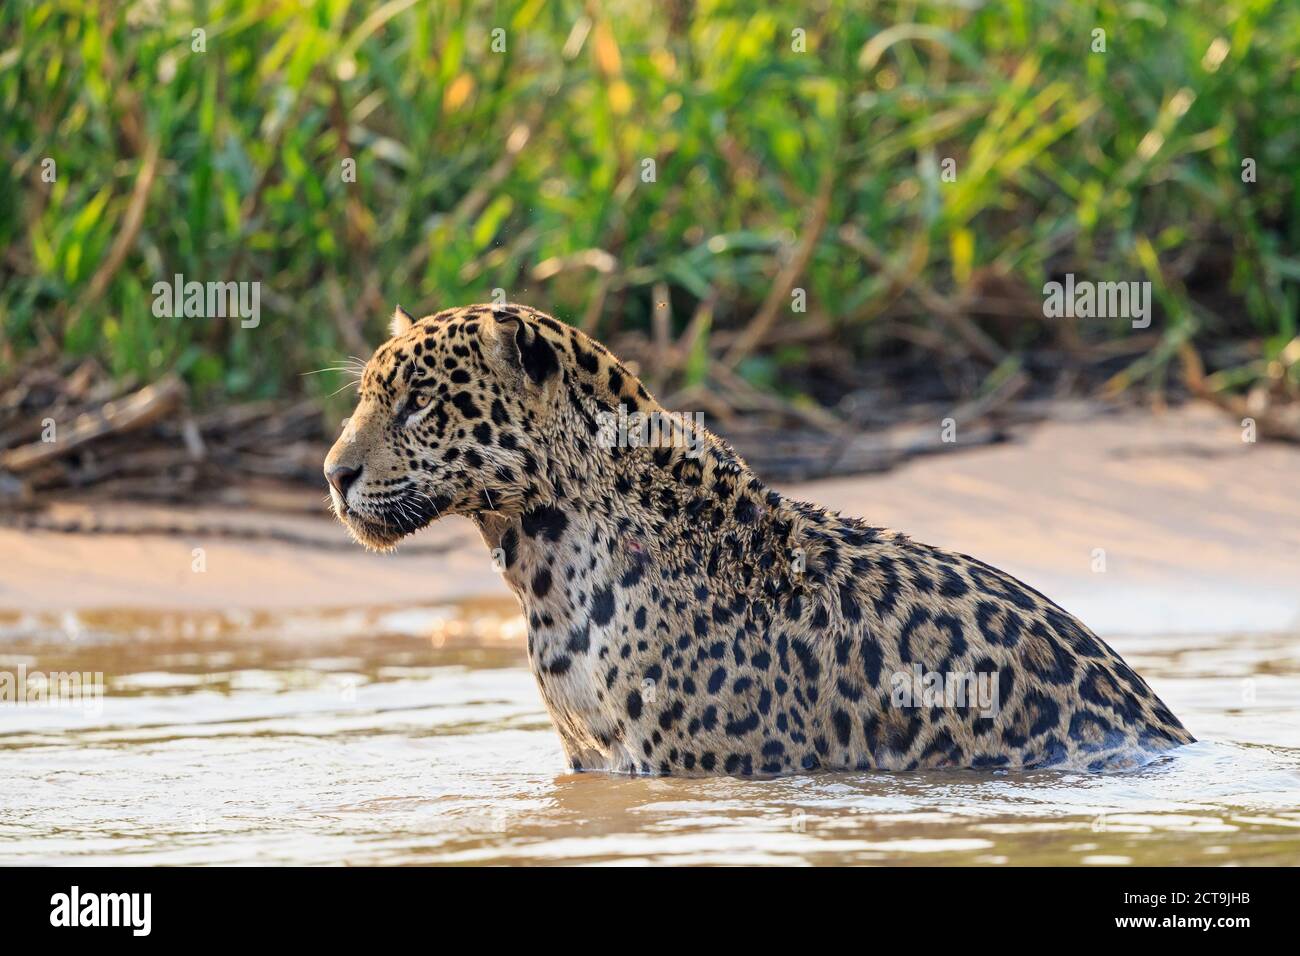 South America, Brasilia, Mato Grosso do Sul, Pantanal, Cuiaba River, Jaguar, Panthera onca, in water Stock Photo